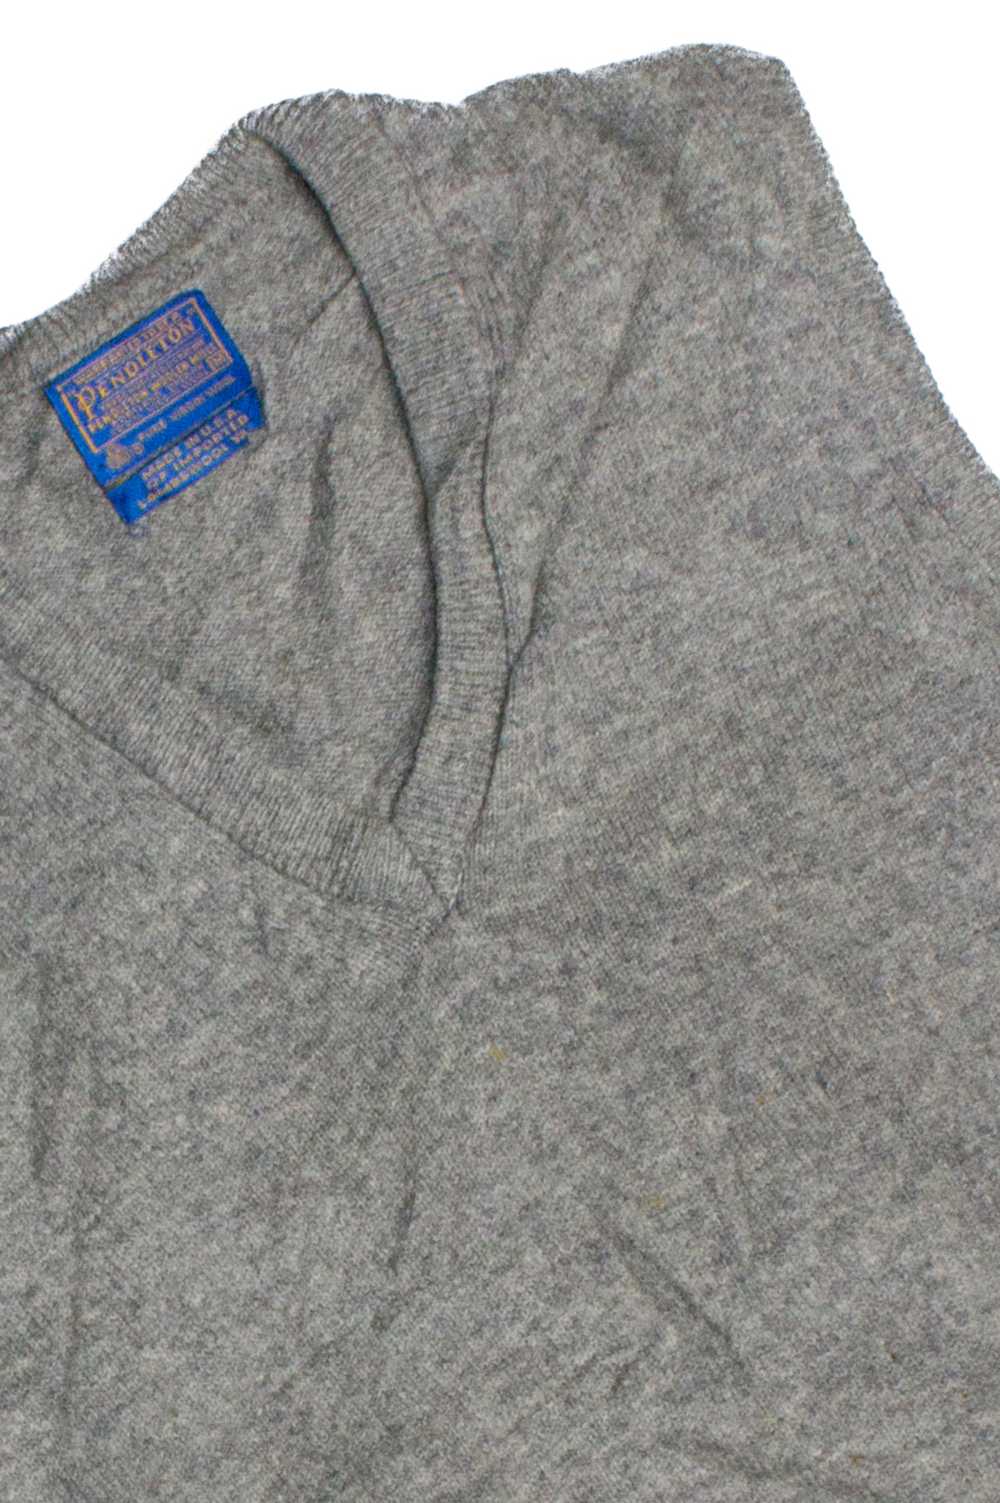 Vintage Pendleton Vest (1990s) - image 1